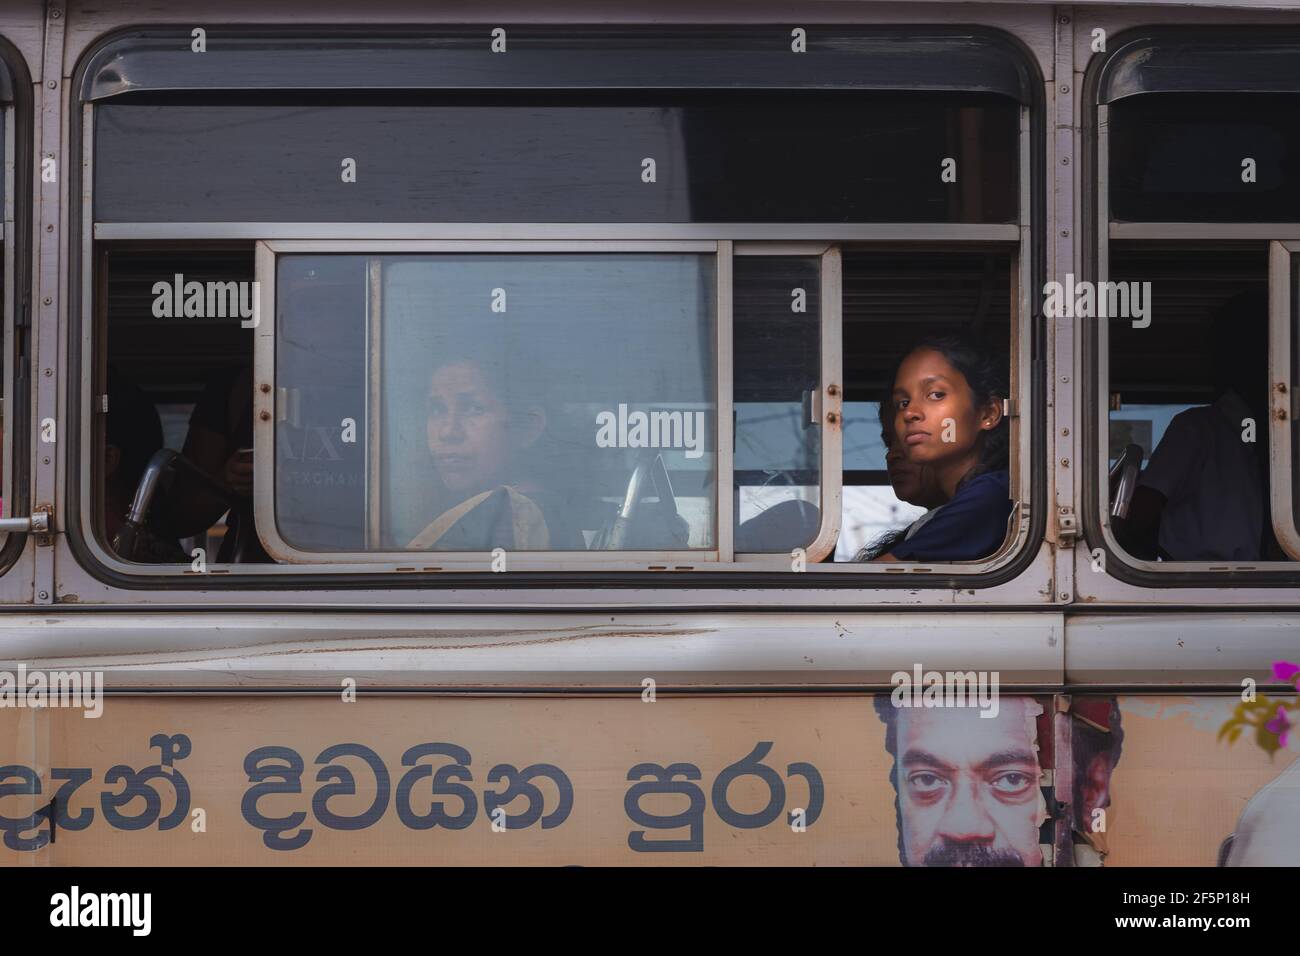 Weligama, Sri Lanka - March 28 2019: Local Sri Lankan women passengers make eye contact out a public transport bus window in Weligama, Sri Lanka. Stock Photo